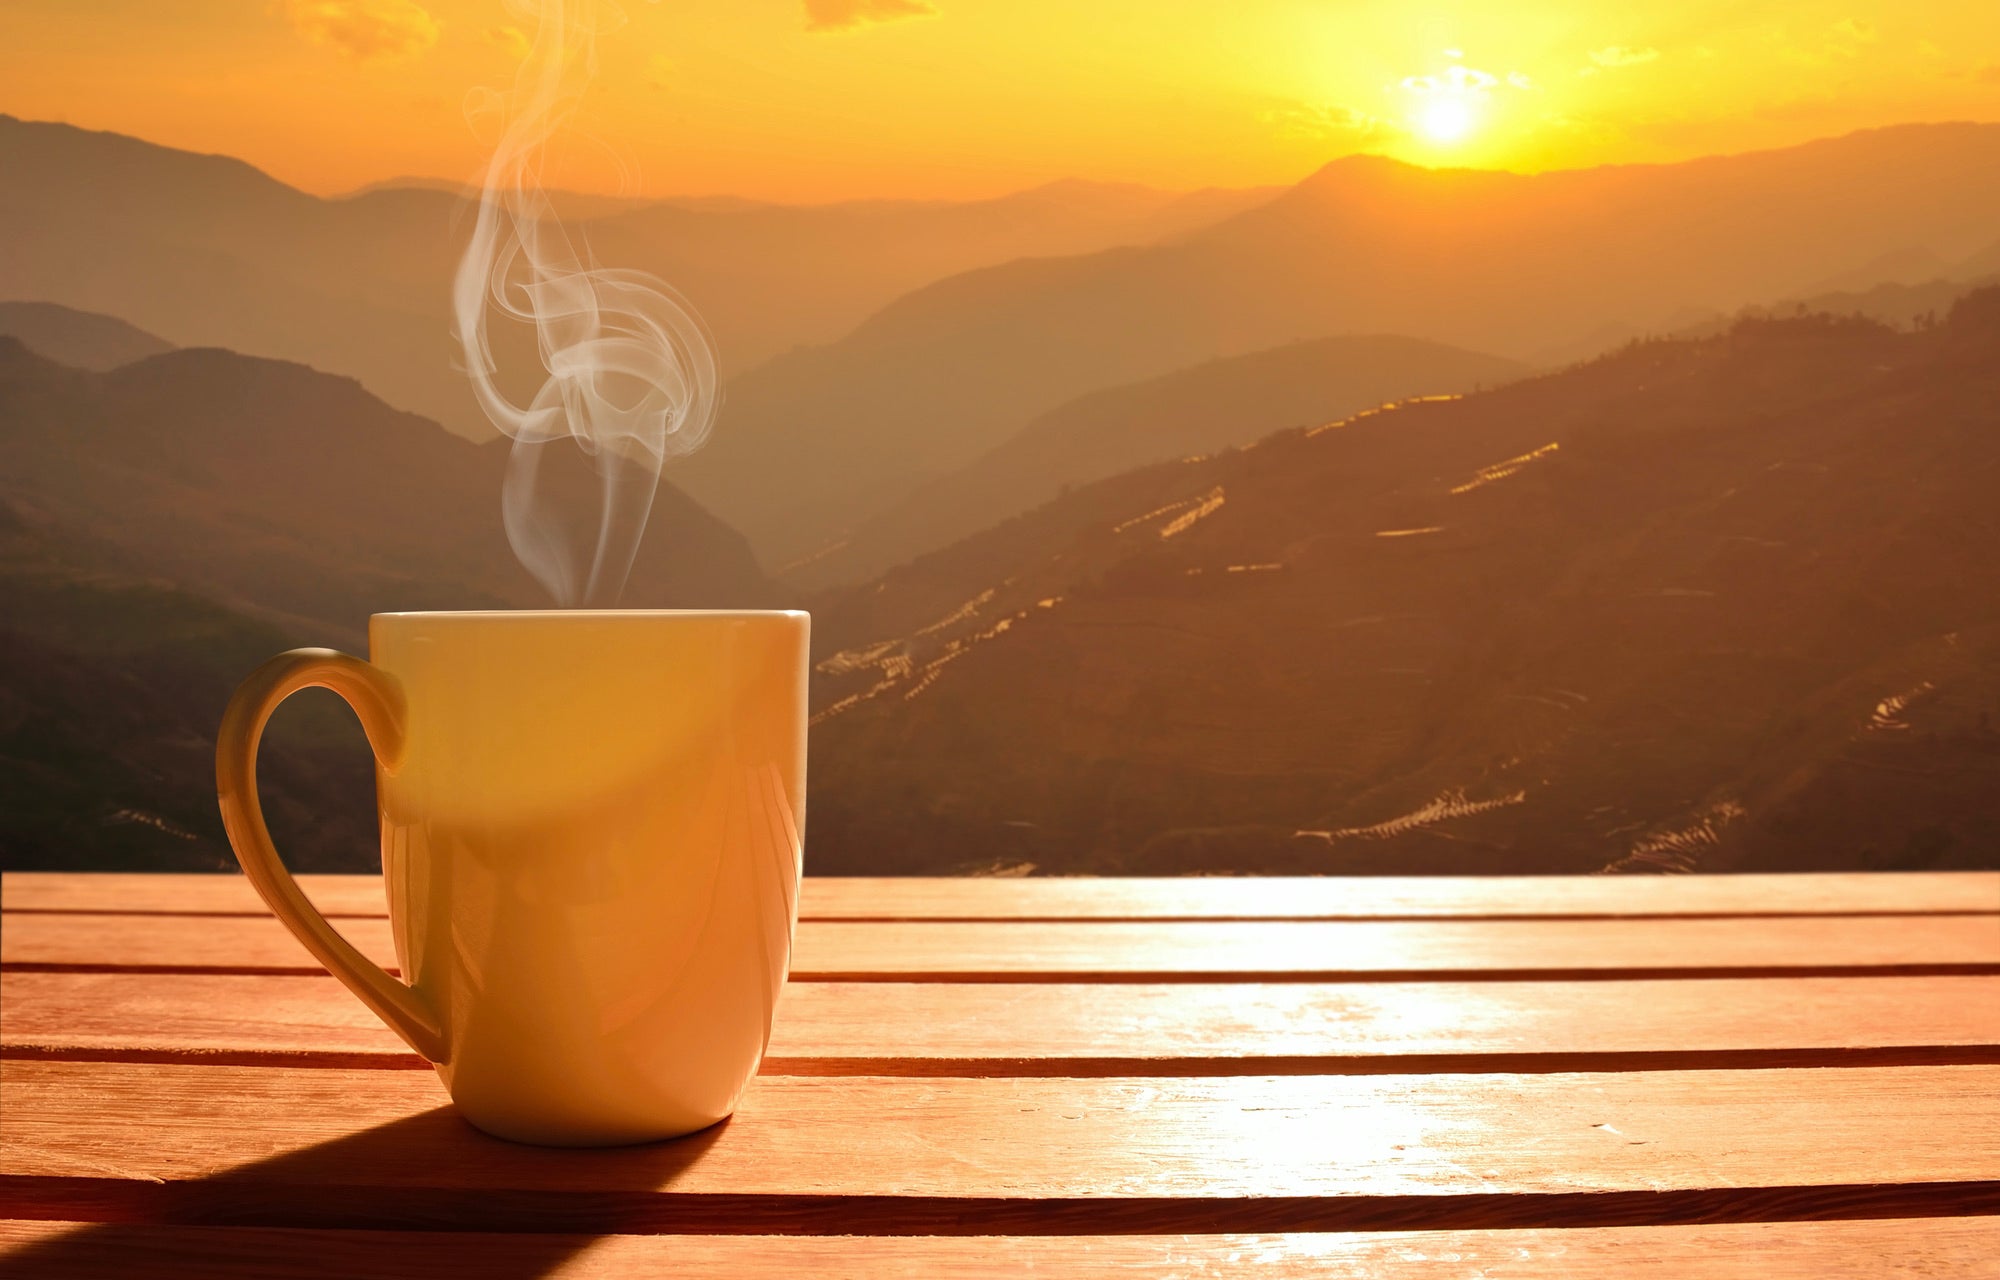 coffee mug in the sunset